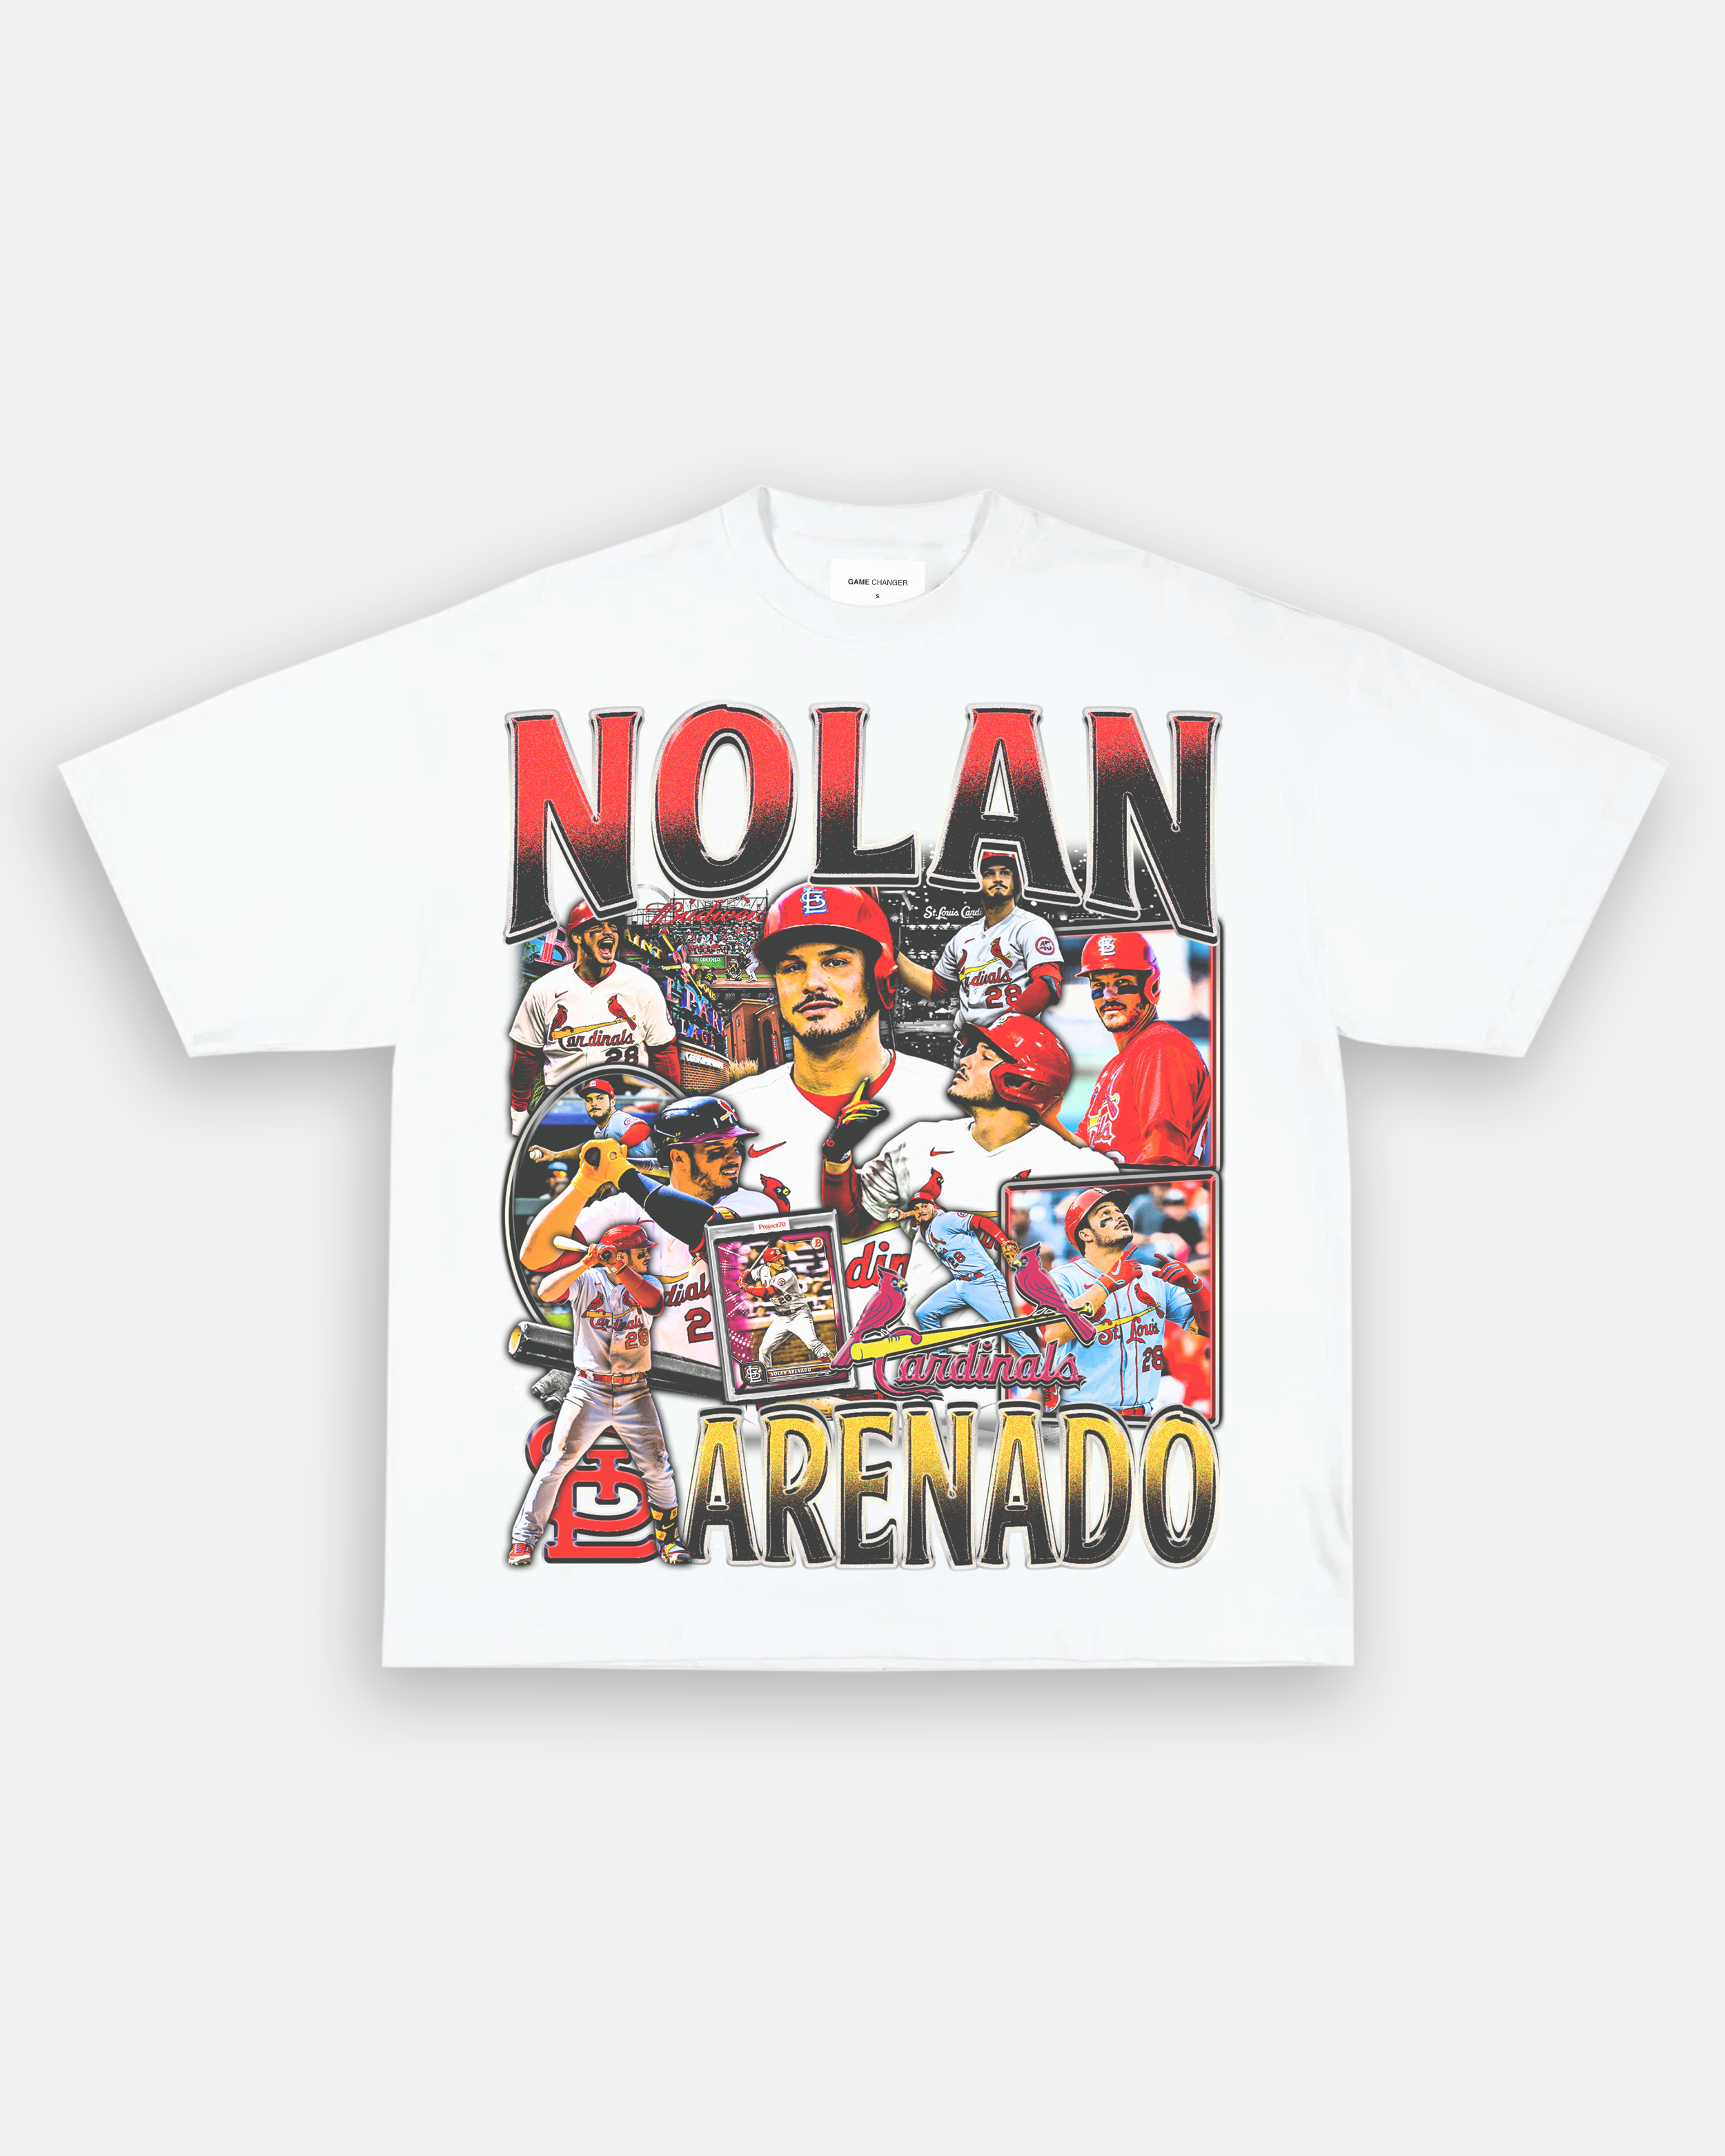 Nolan Arenado Graphic T-Shirt for Sale by baseballcases